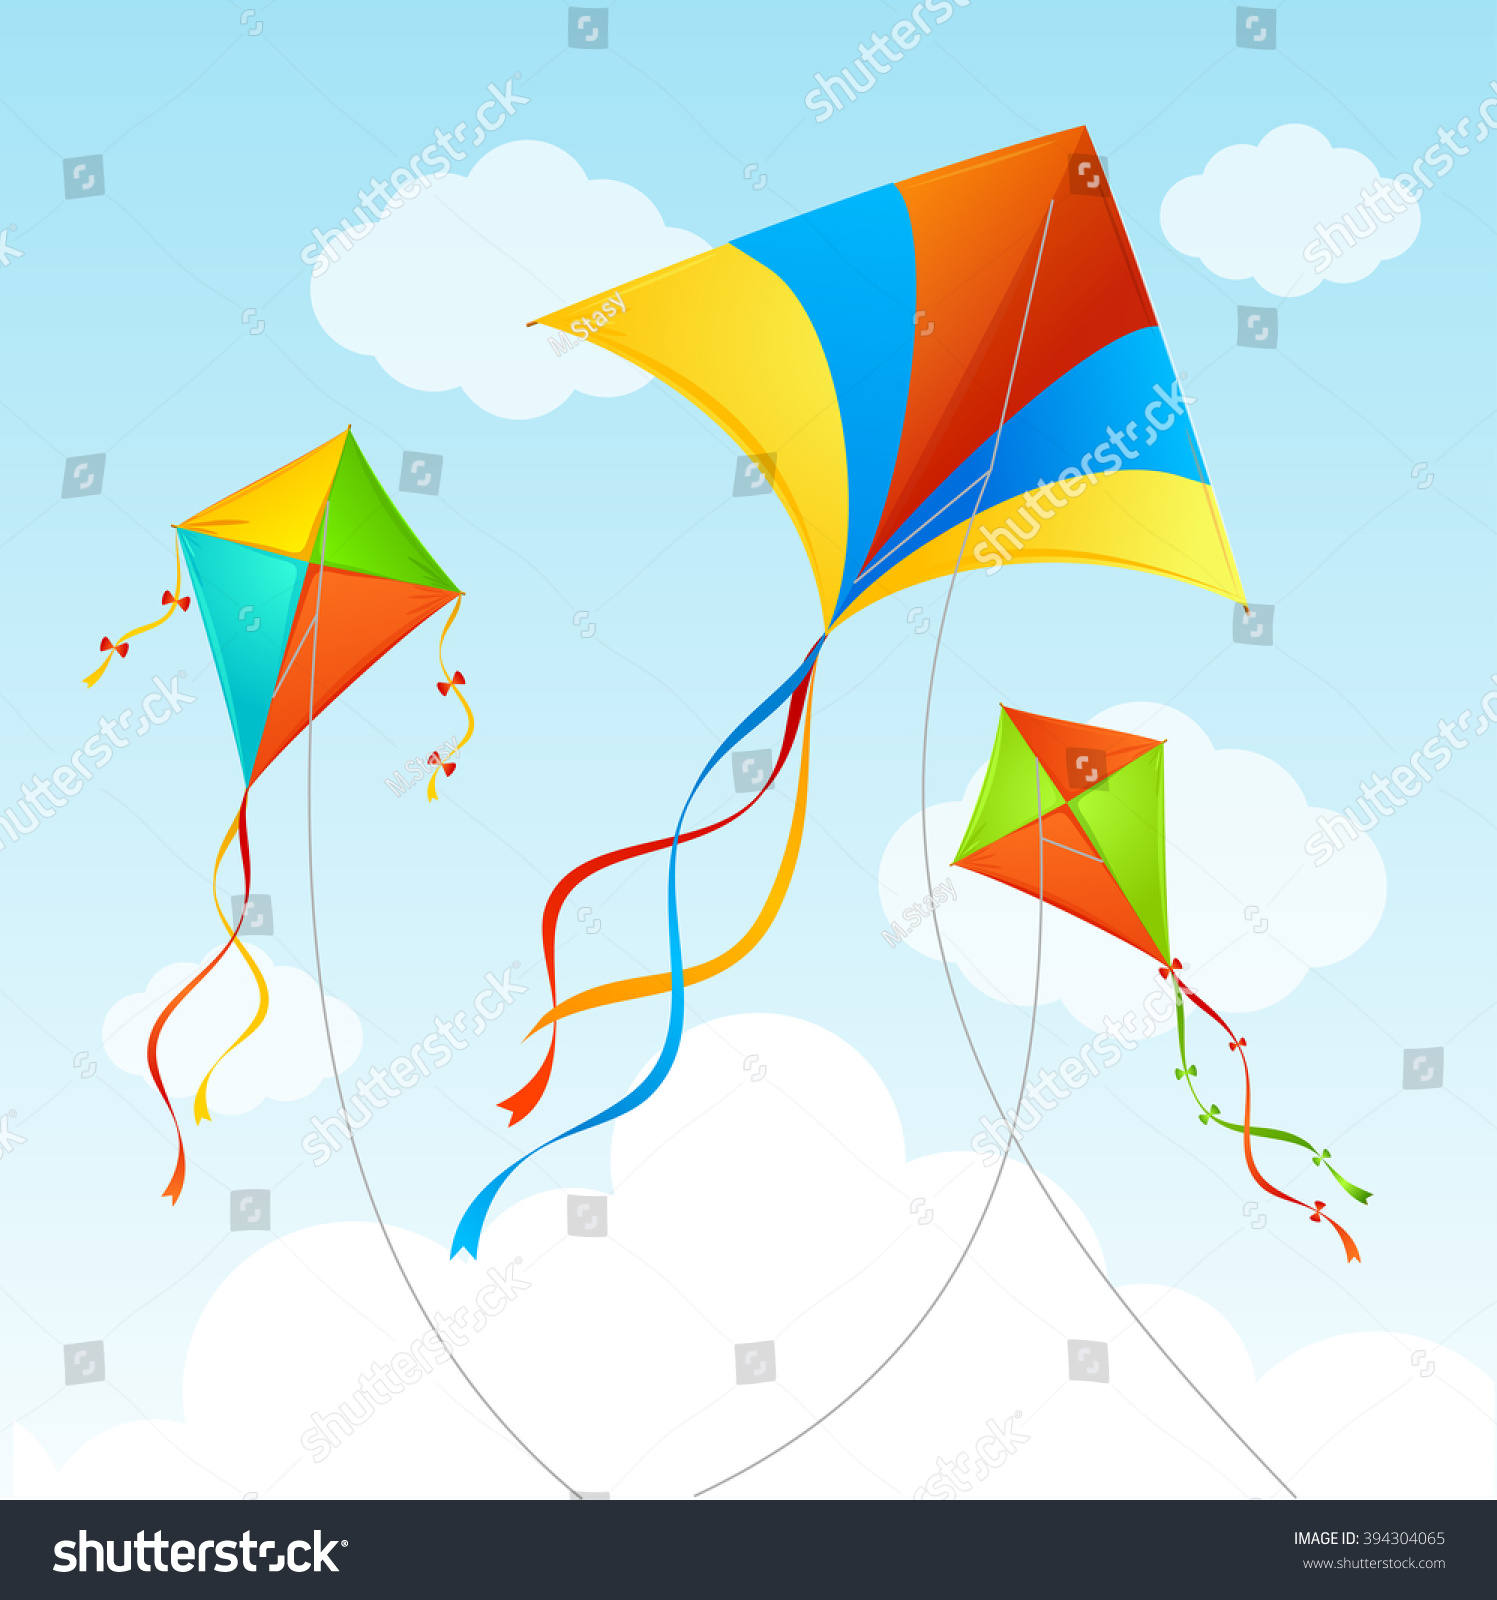 Fly Kite In Sky. Summer Background. Vector Illustration - 394304065